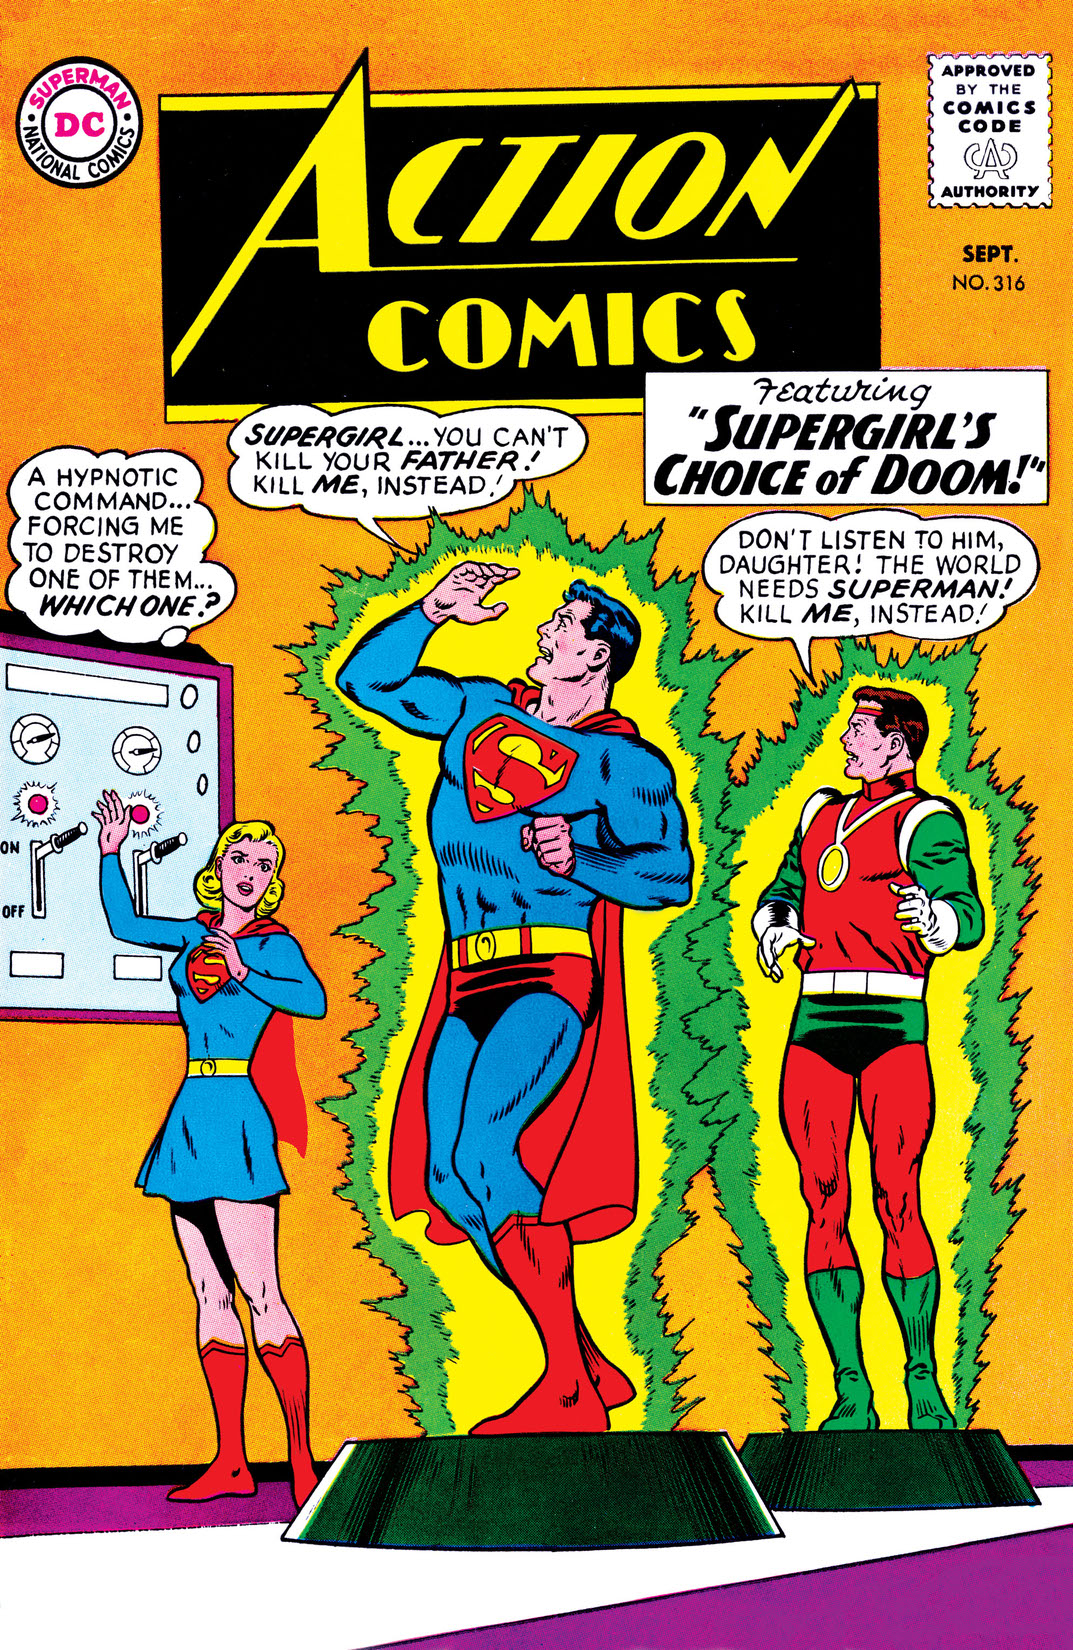 Action Comics (1938-) #316 preview images